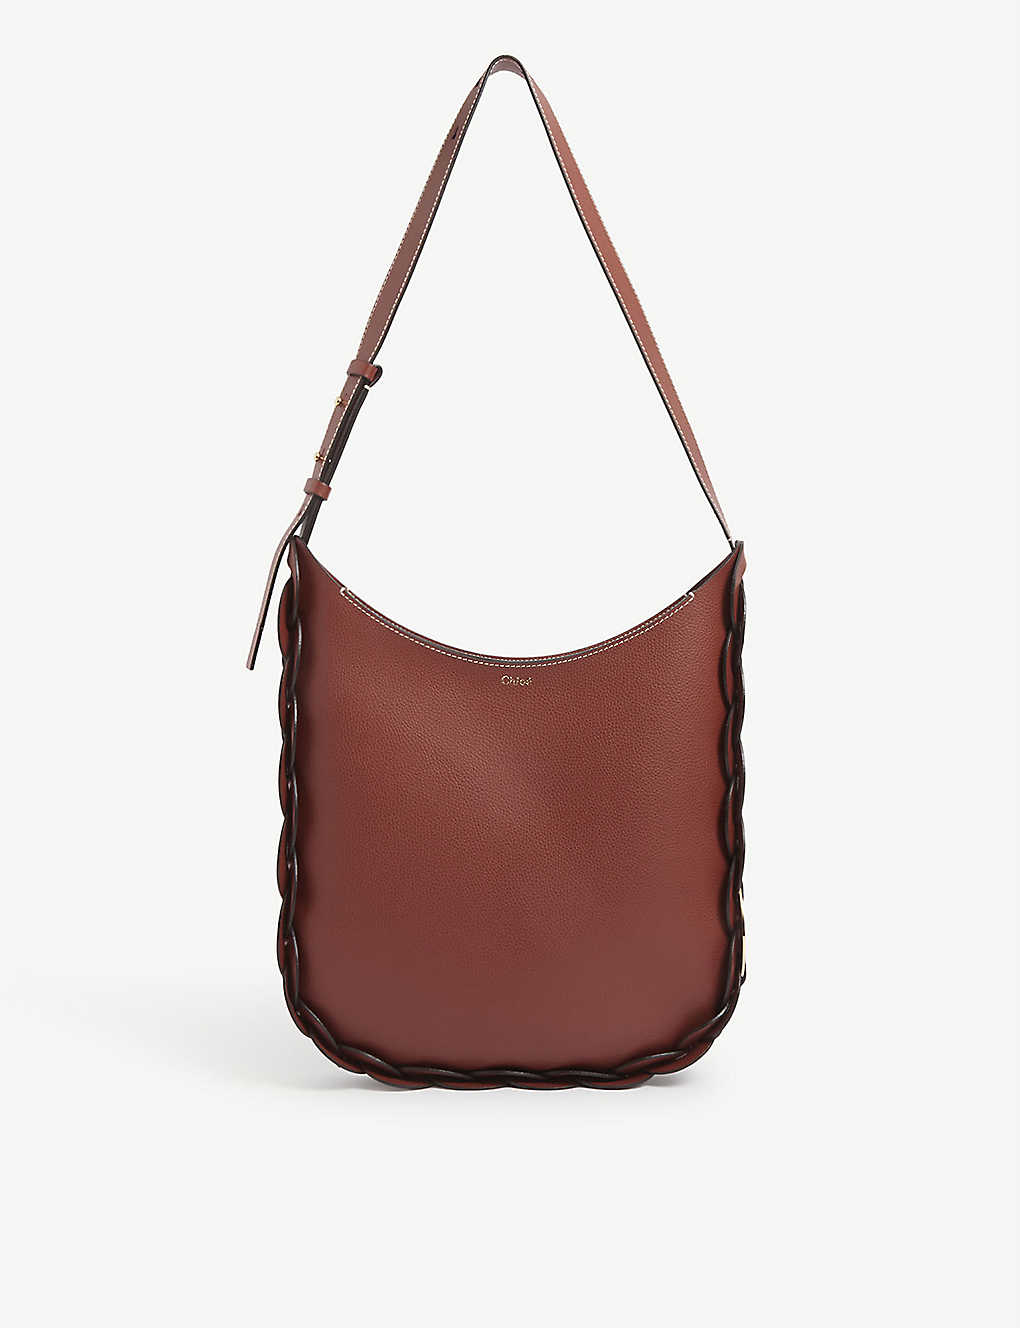 CHLOE - Darryl large leather hobo bag | Selfridges.com